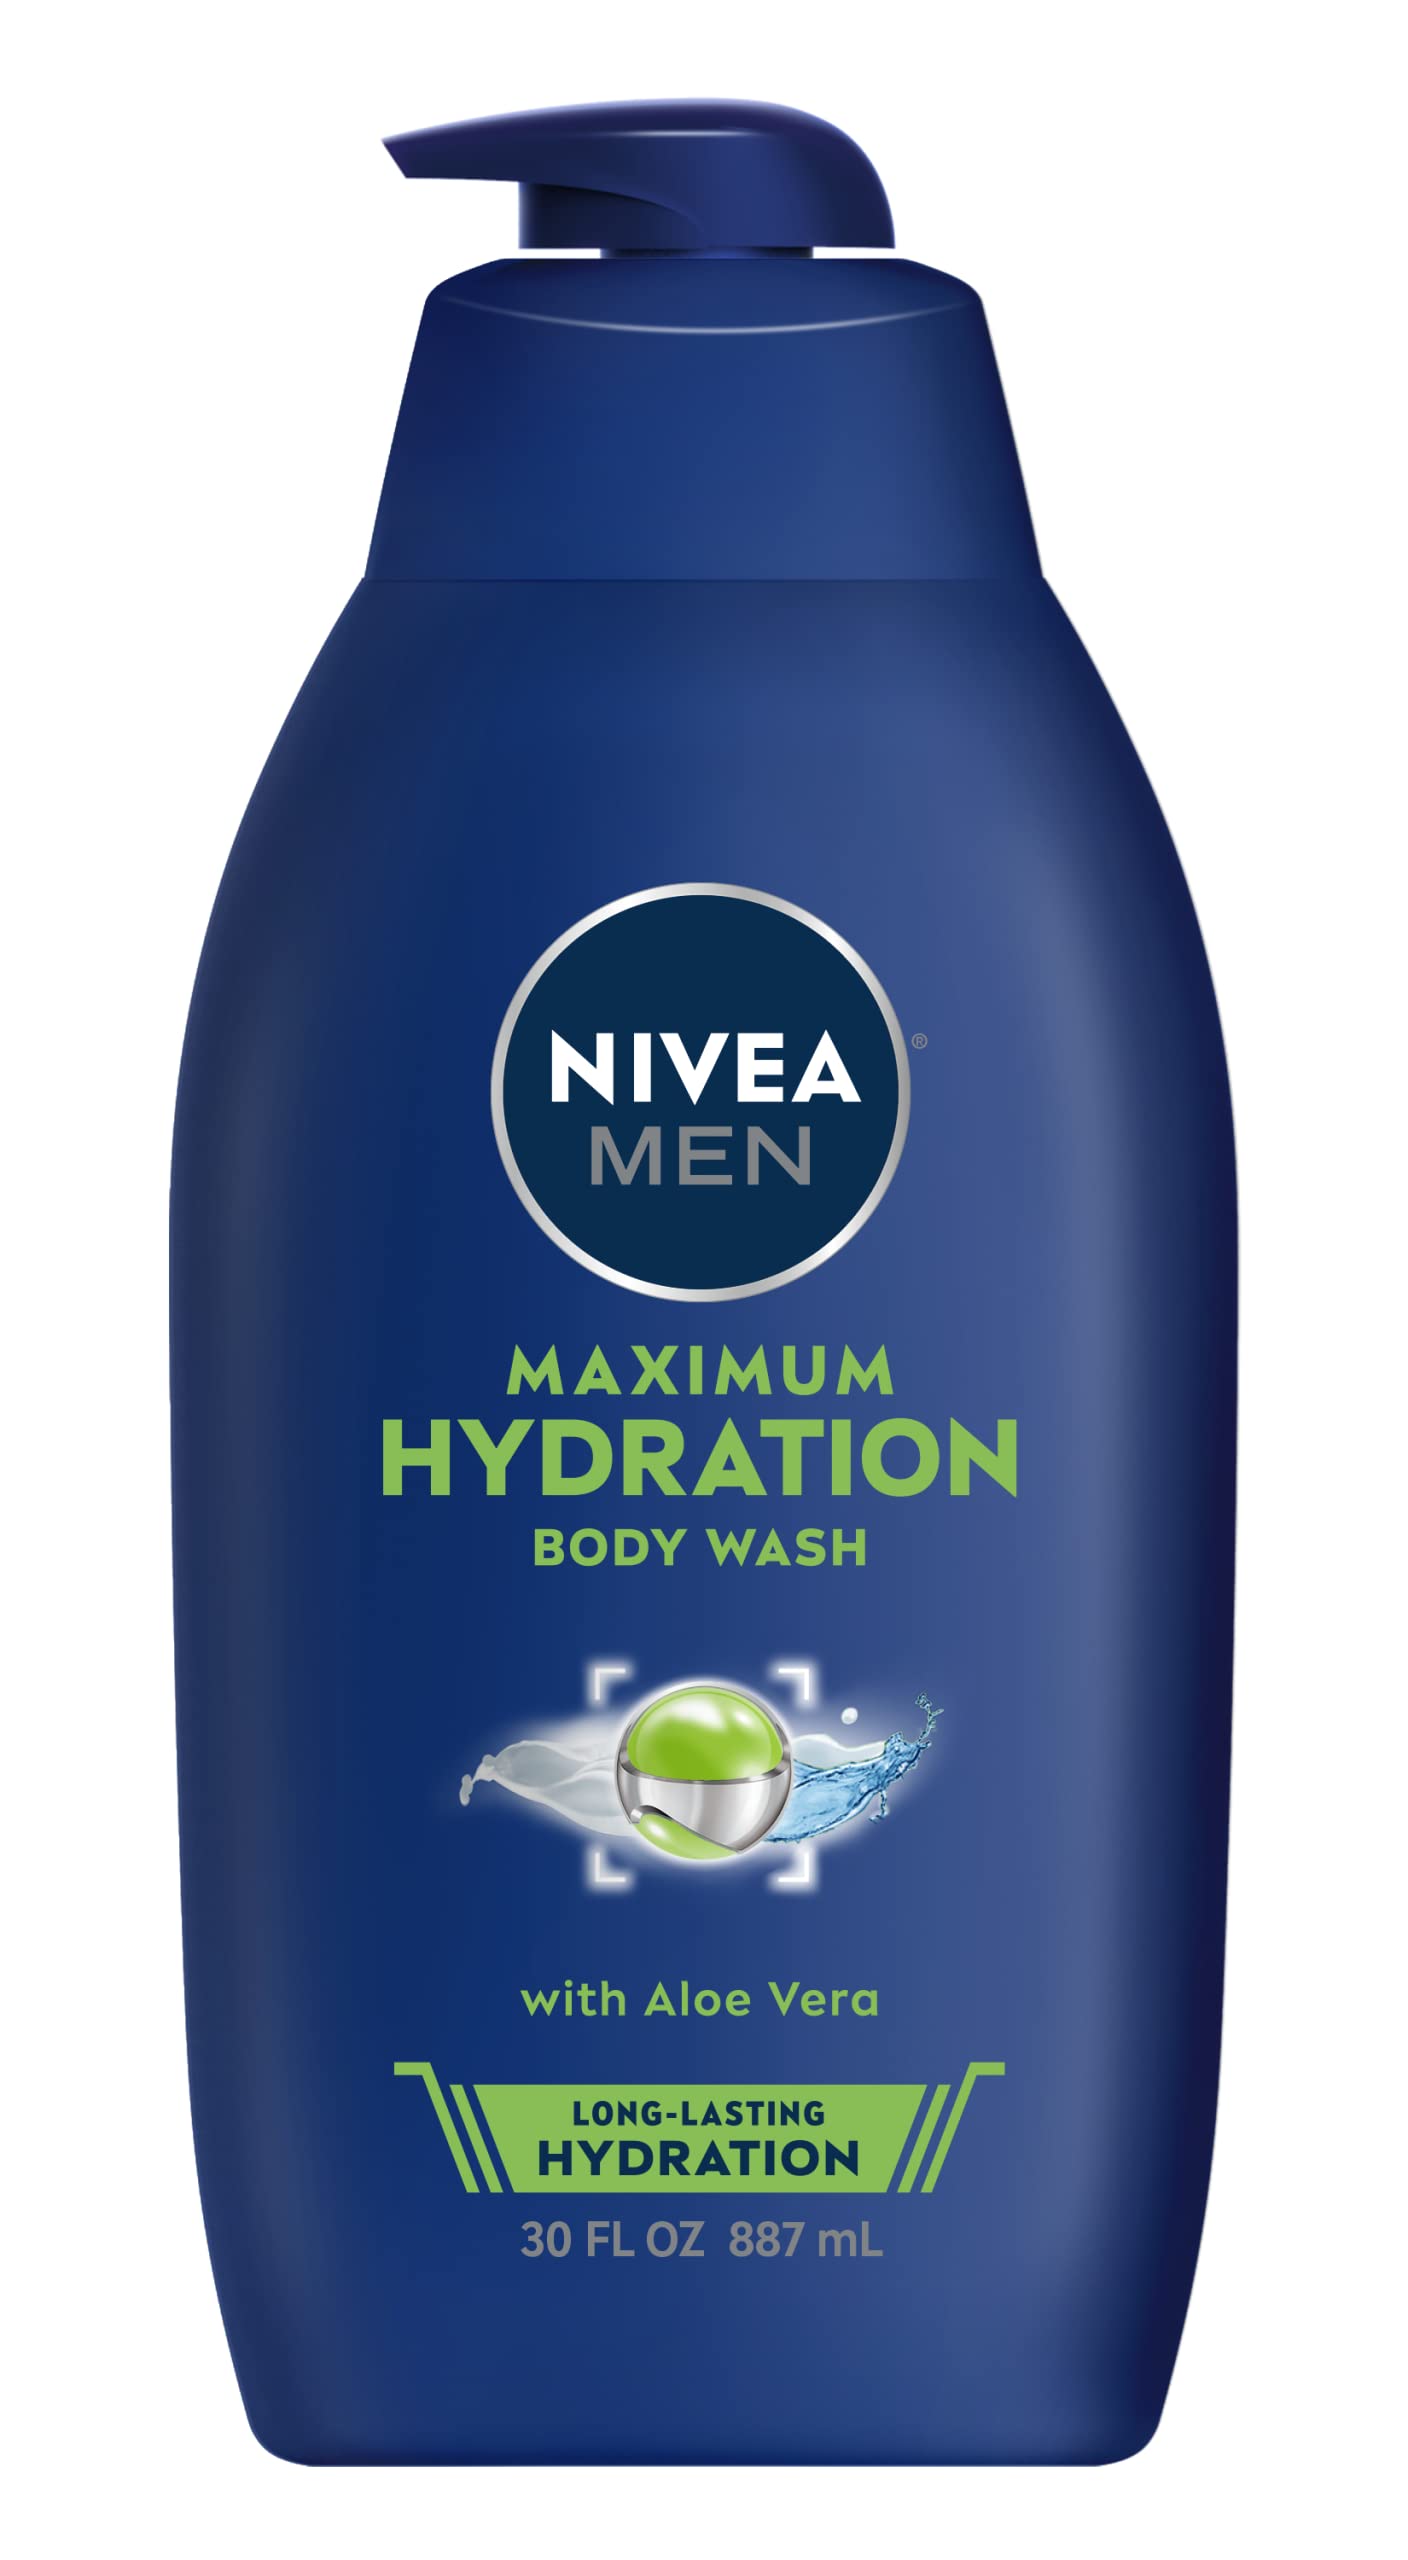 NIVEA Men Maximum Hydration Body Wash, Aloe Vera Body Wash for Dry Skin, 30 Fl Oz Pump Bottle